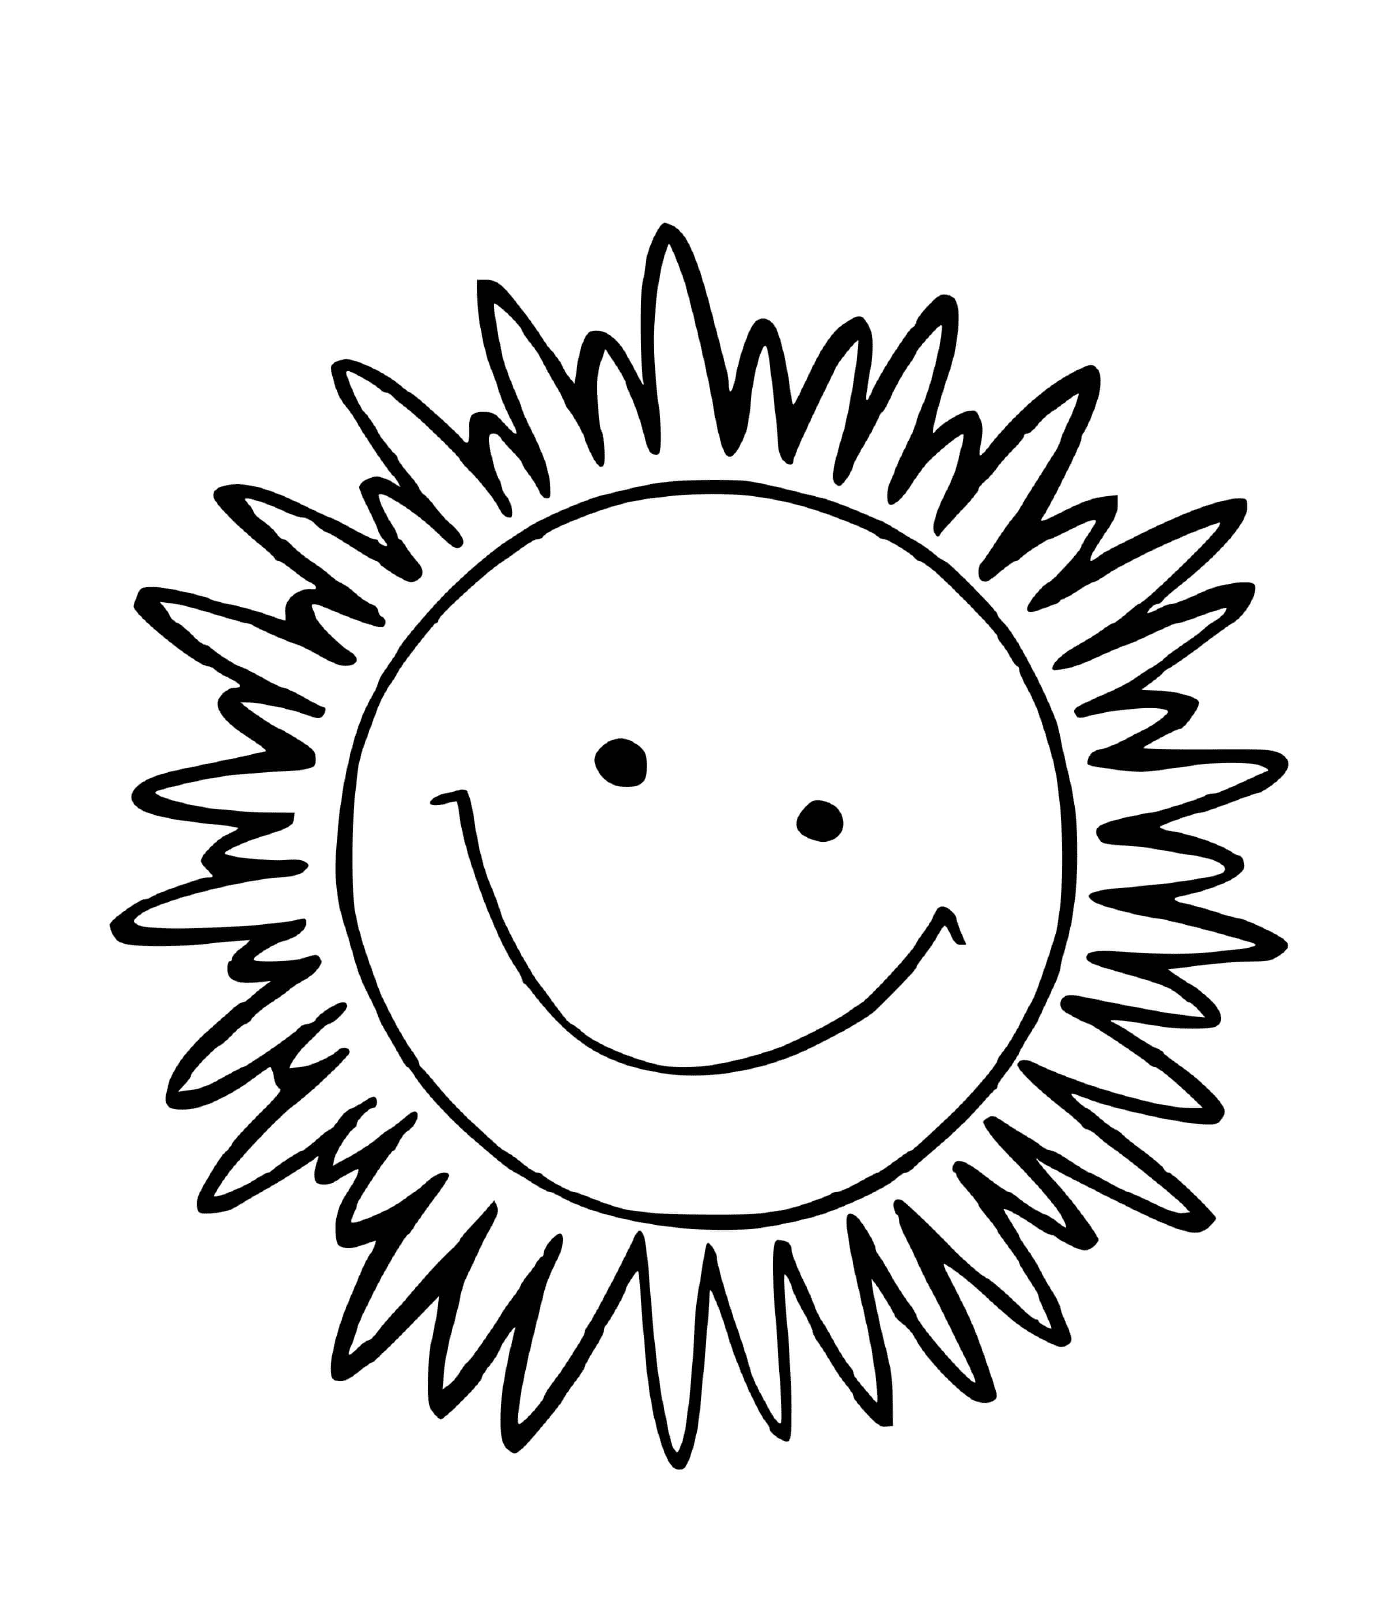  Sole sorridente in fiore 